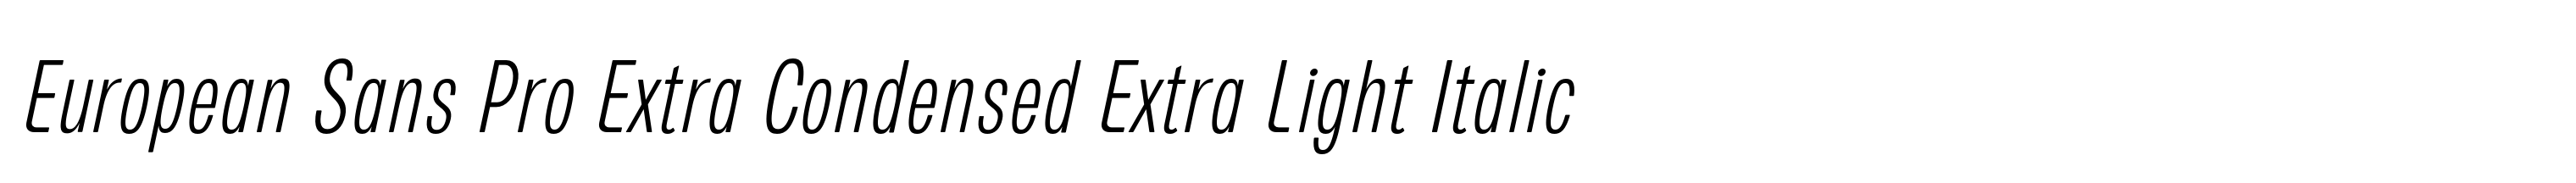 European Sans Pro Extra Condensed Extra Light Italic